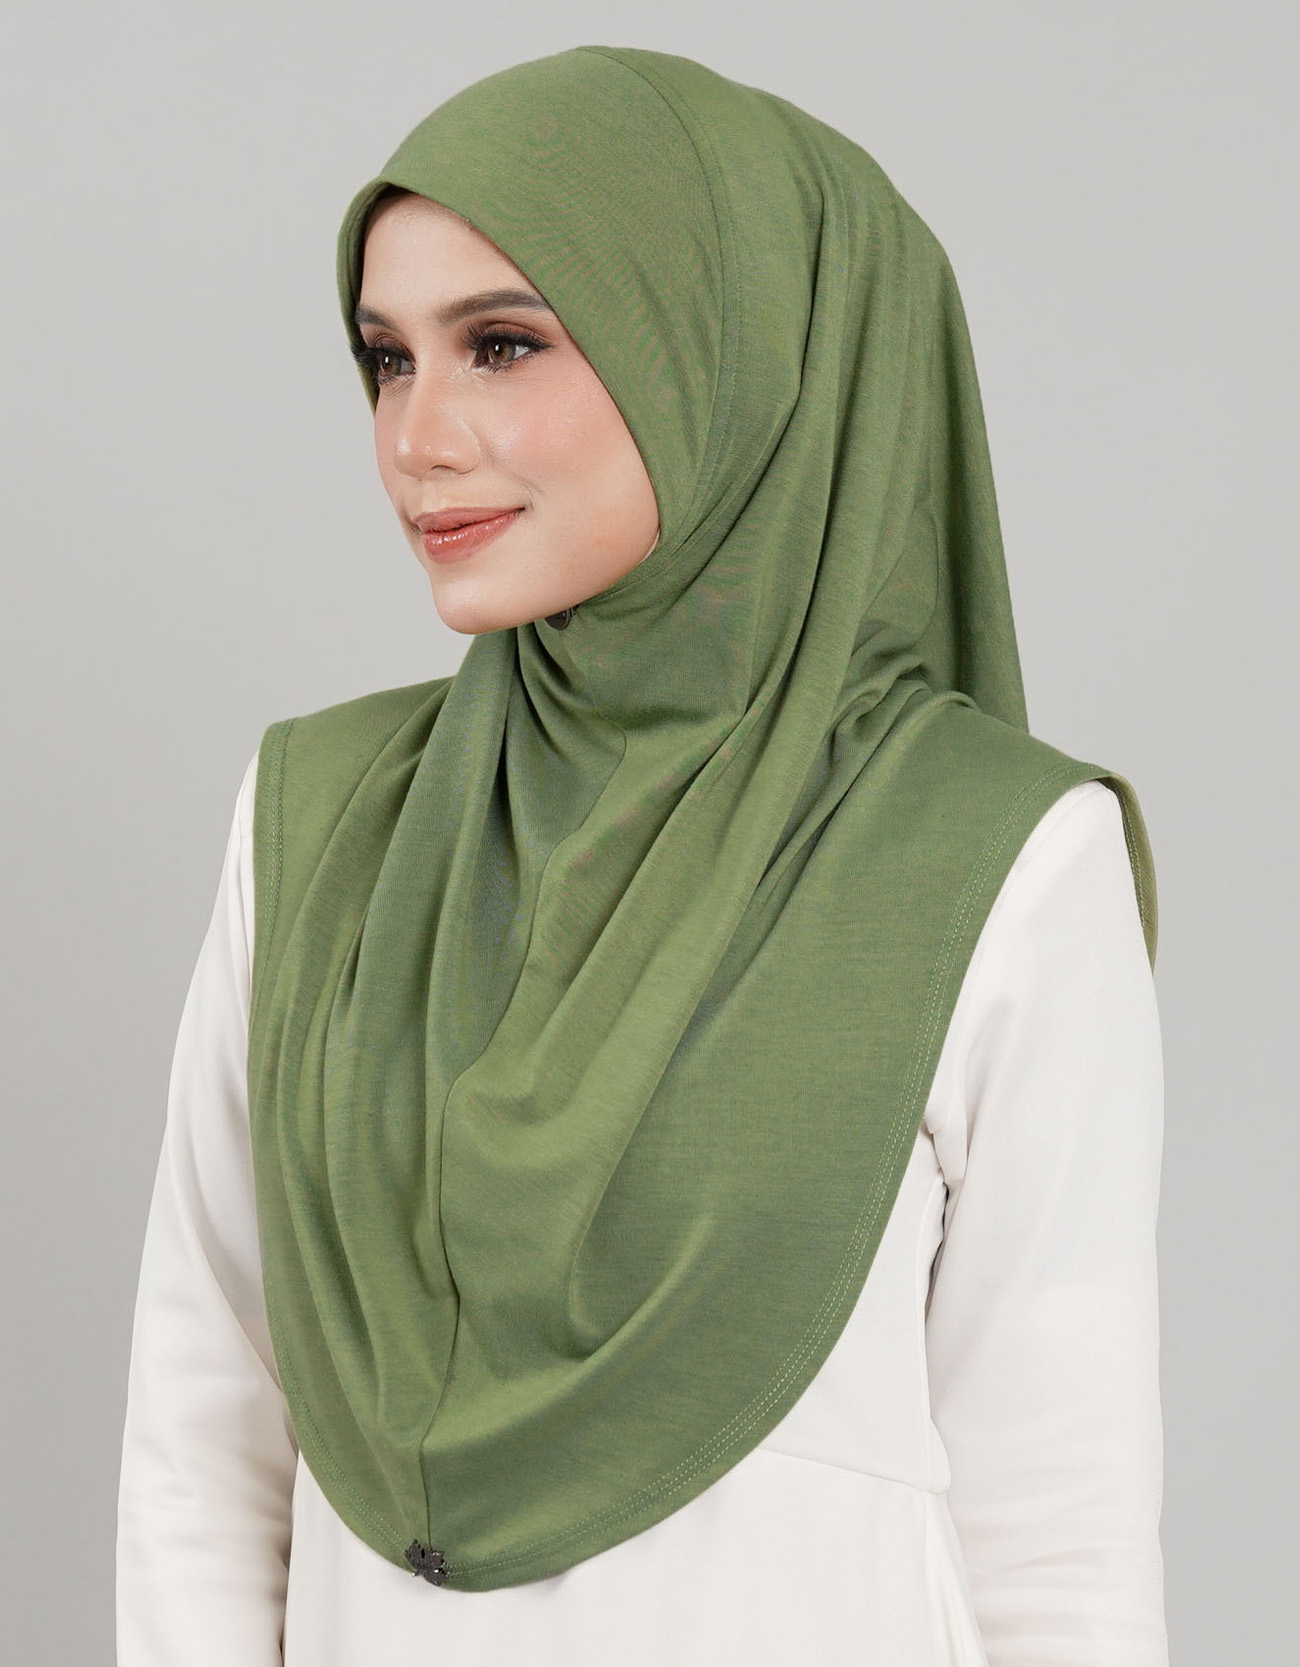 Express Hijab Damia Plain - 07 Pickle